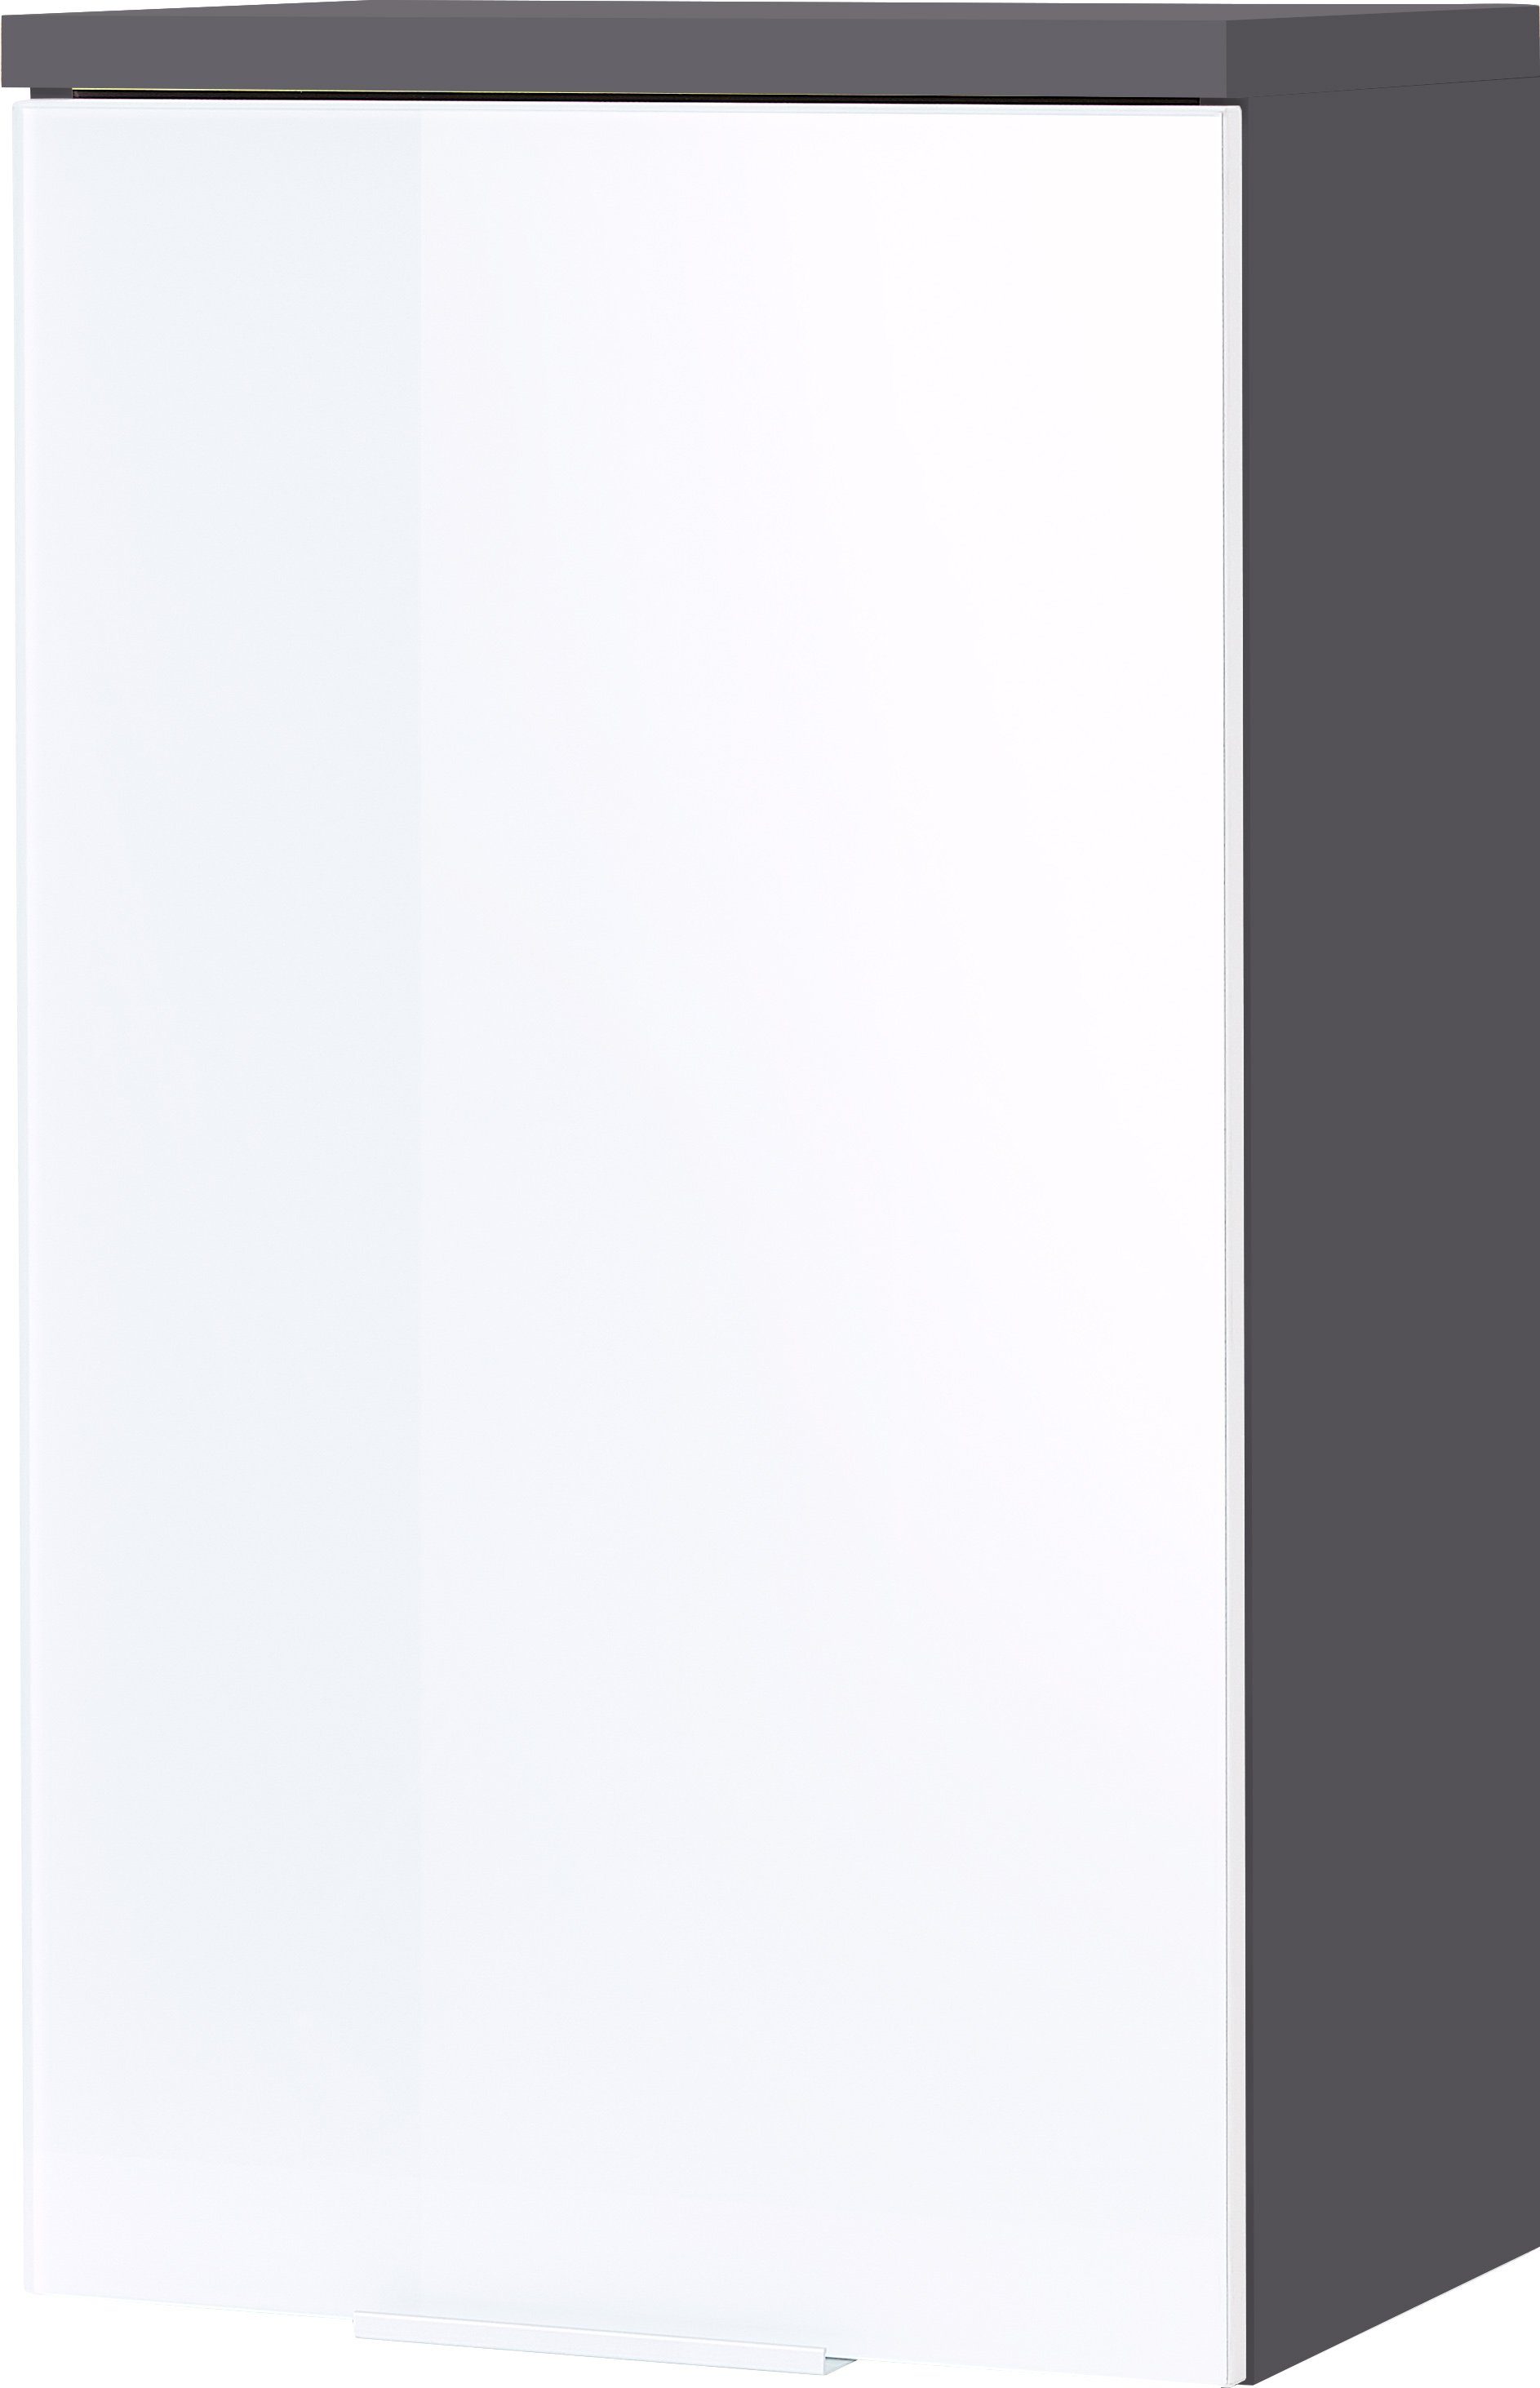 KADIMA DESIGN Midischrank LEINE Badehängeschrank Grau x 69 39 x Weiß 27